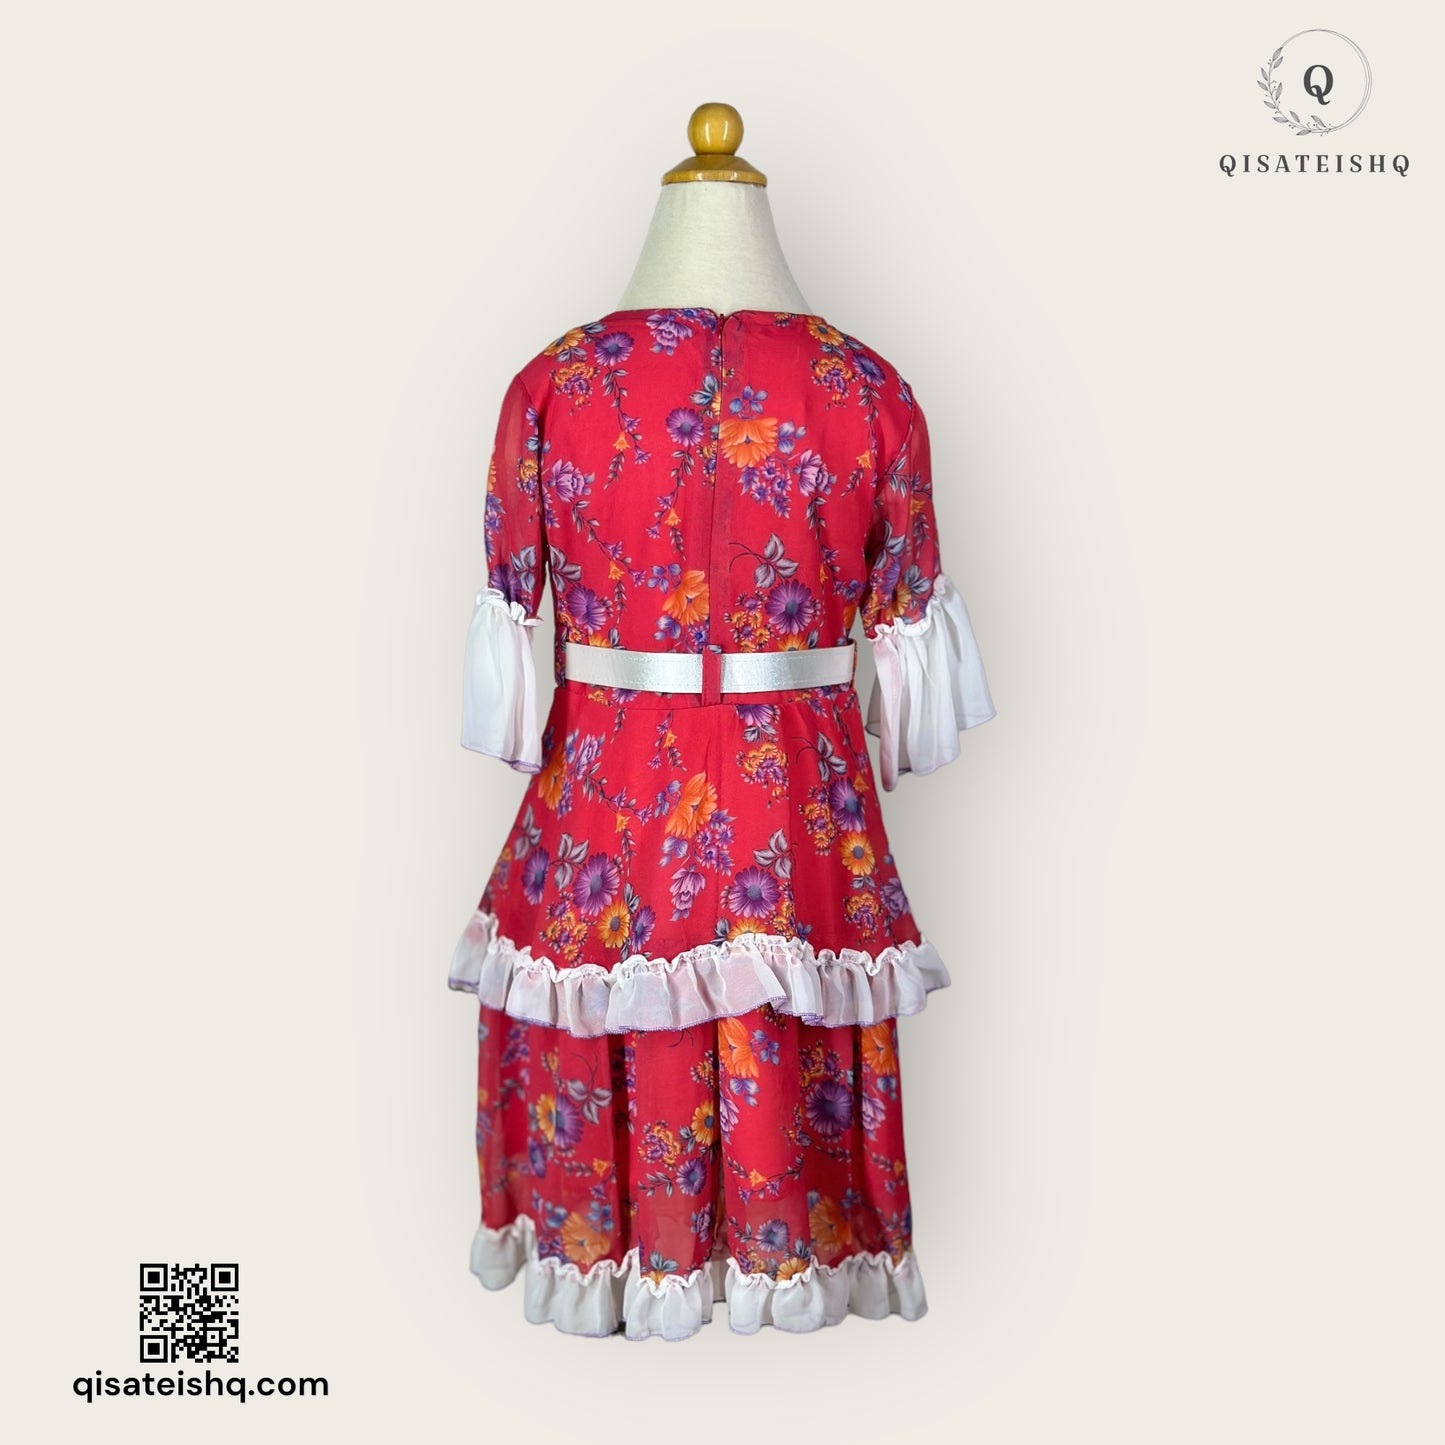 Girls' floral dress with belt